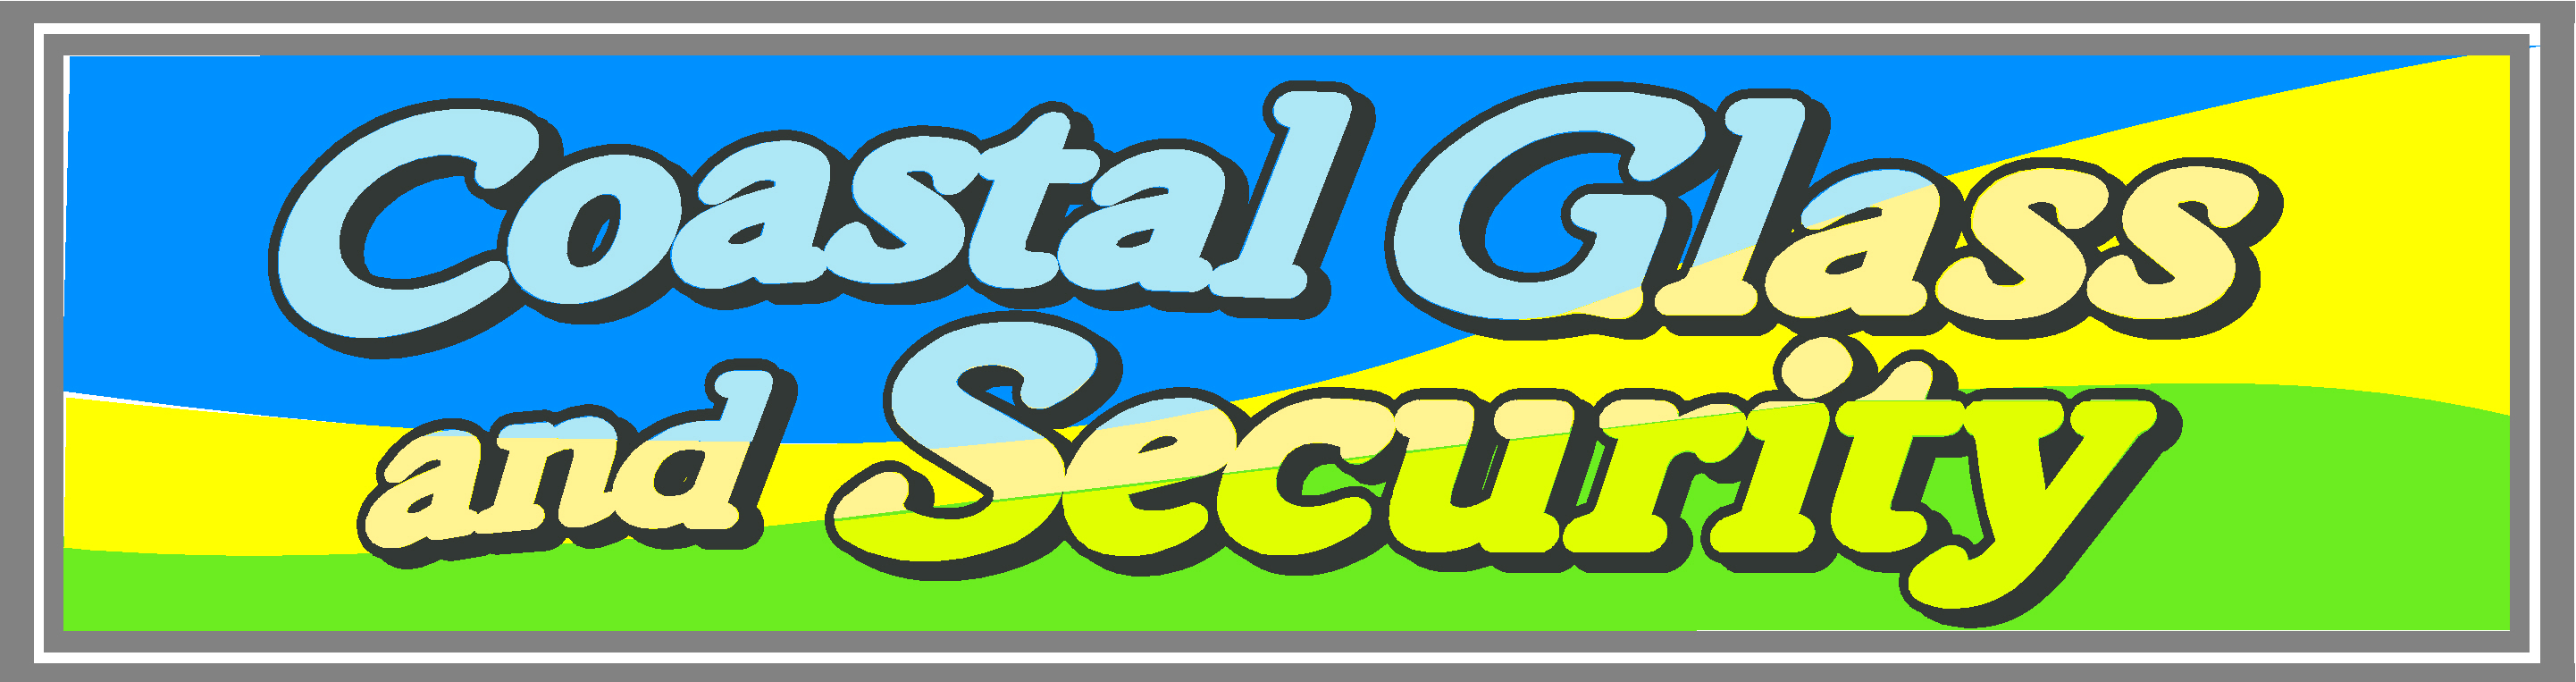 Coastal Glass and Security Logo